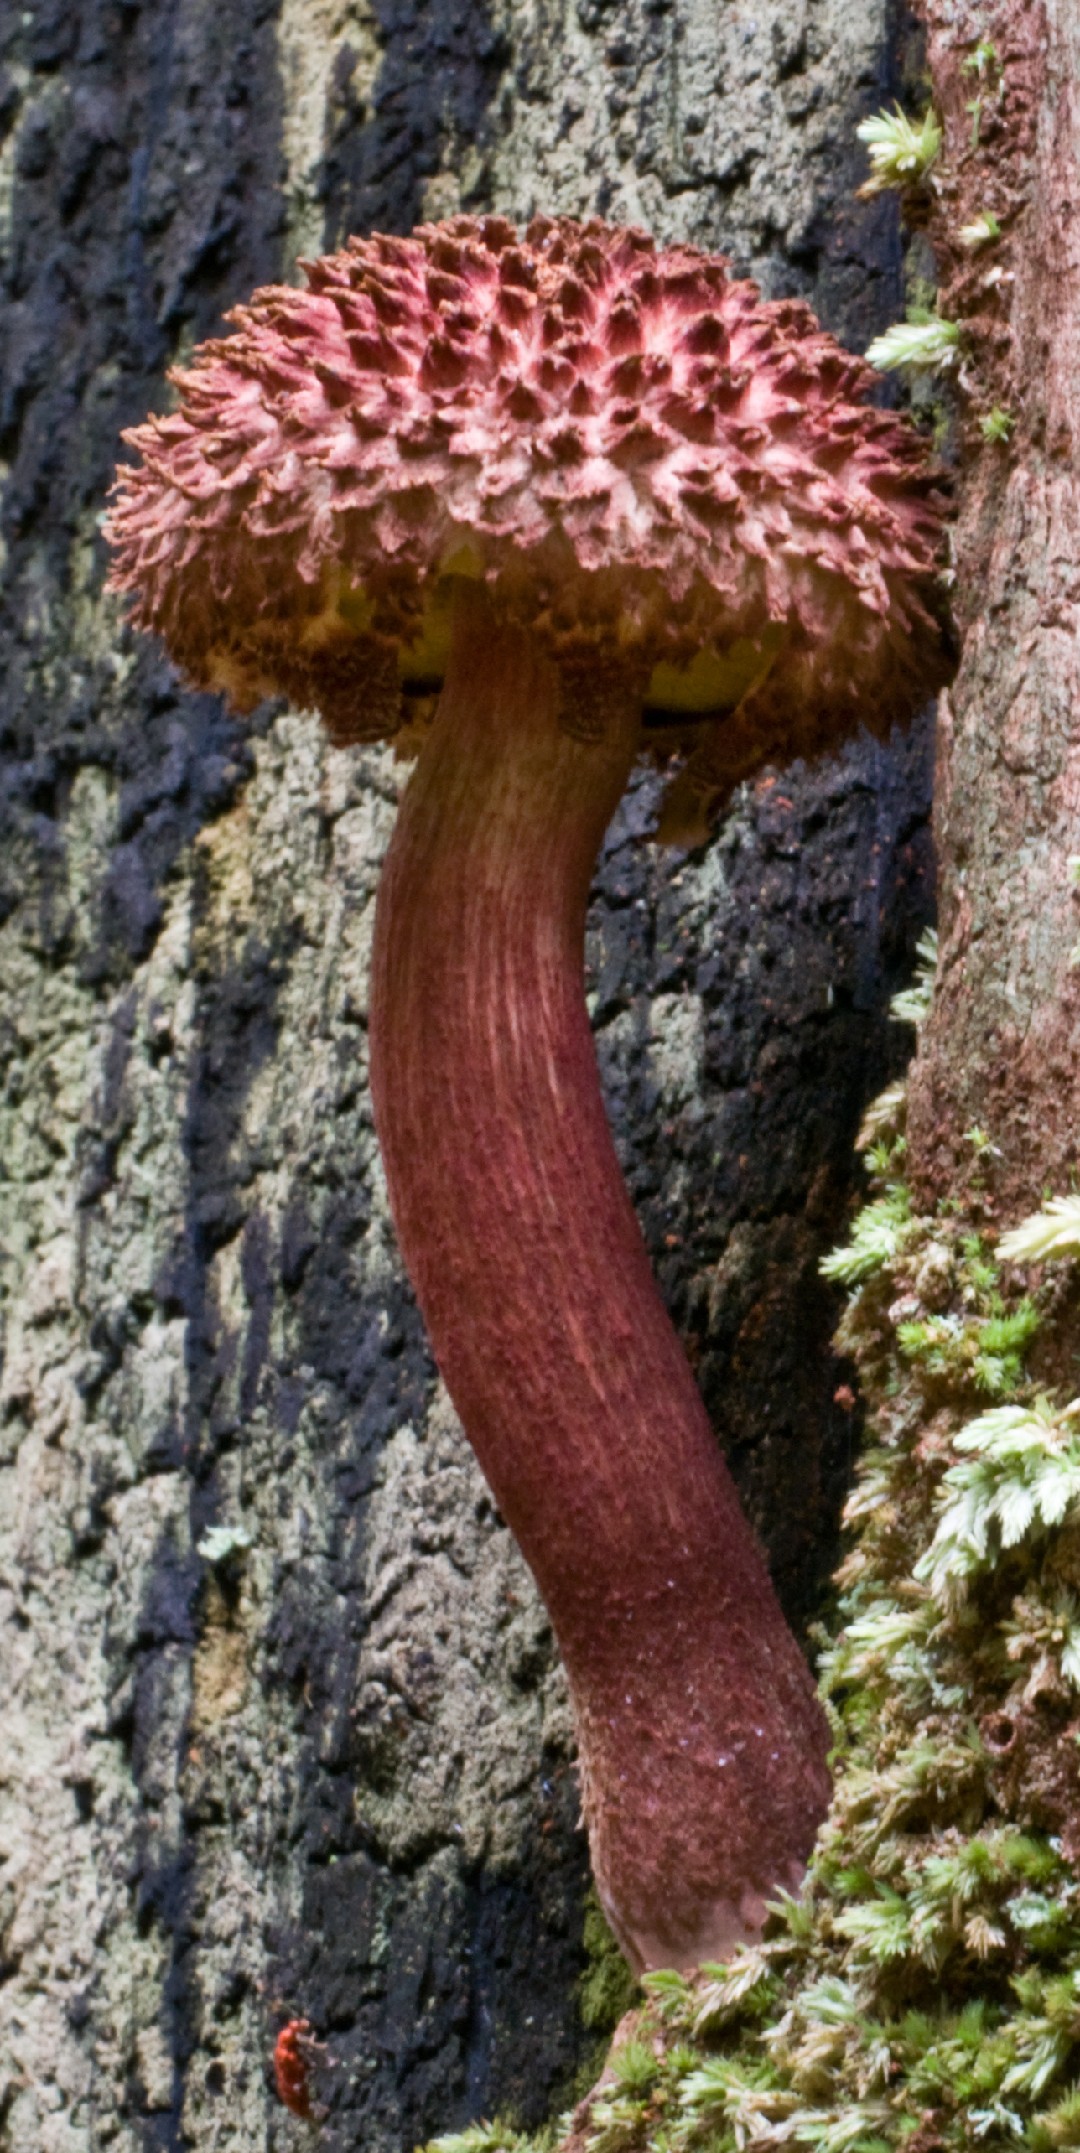 Shaggy cap (Boletellus emodensis)